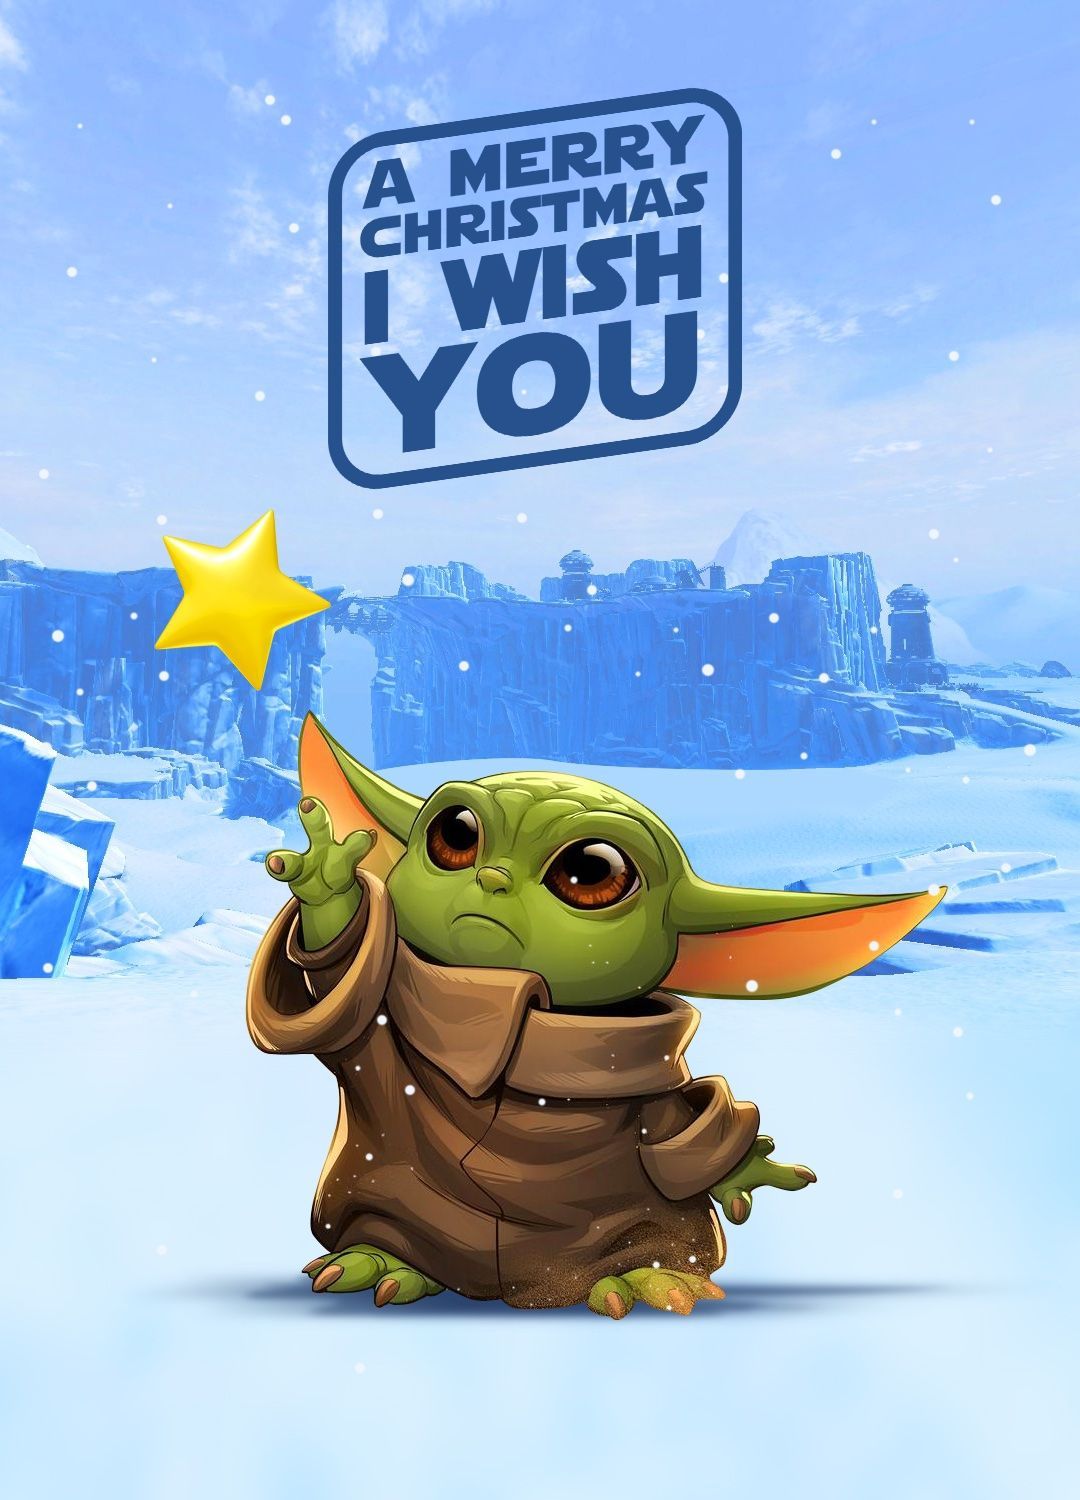 Merry Christmas I Wish You (Baby Yoda). Yoda wallpaper, Star wars christmas, Star wars wallpaper